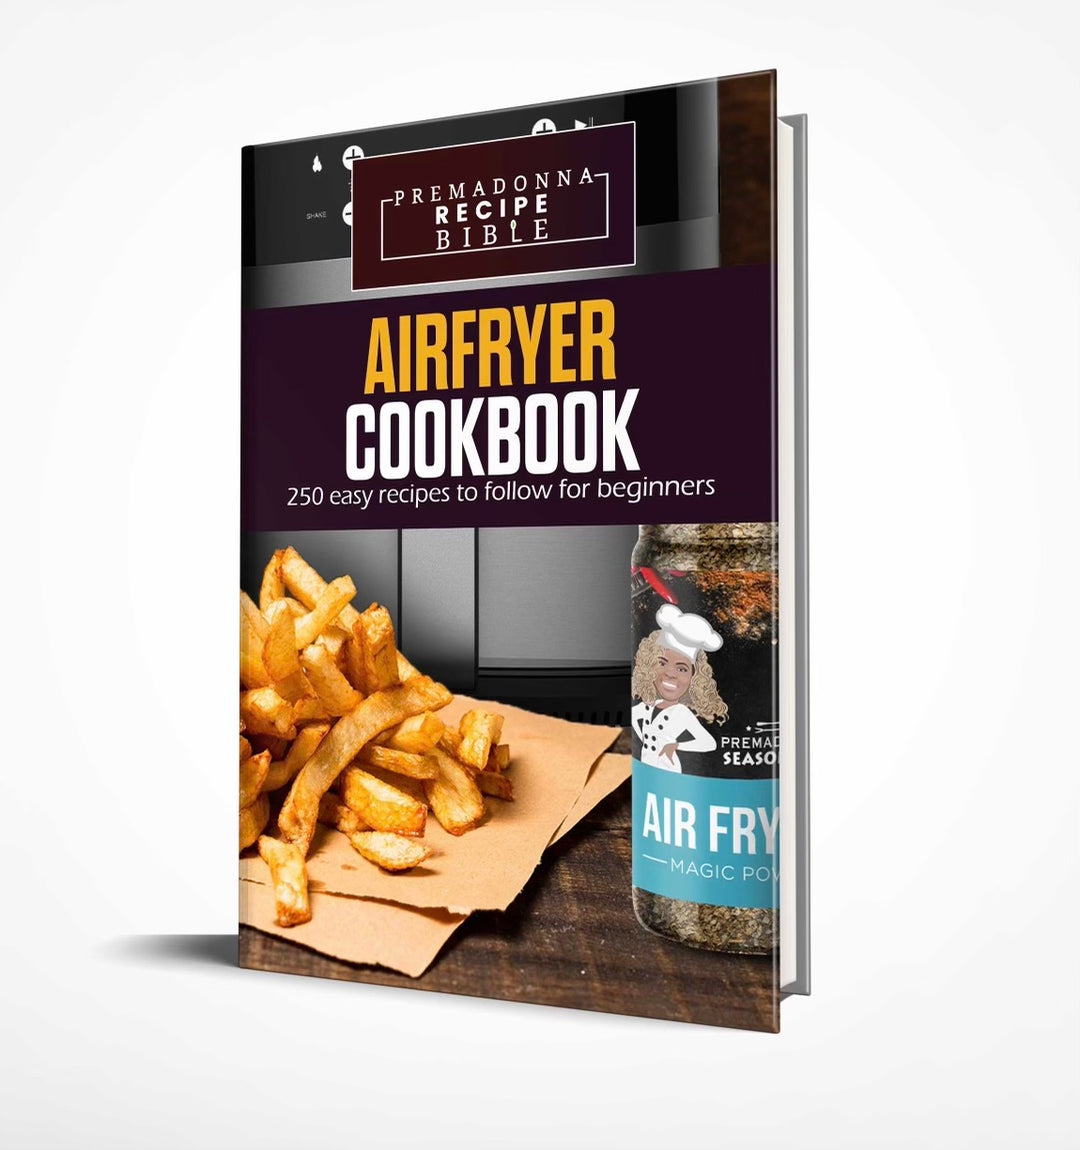 Premadonna Recipe Bible Air Fryer Edition (250 Recipes) Ebook